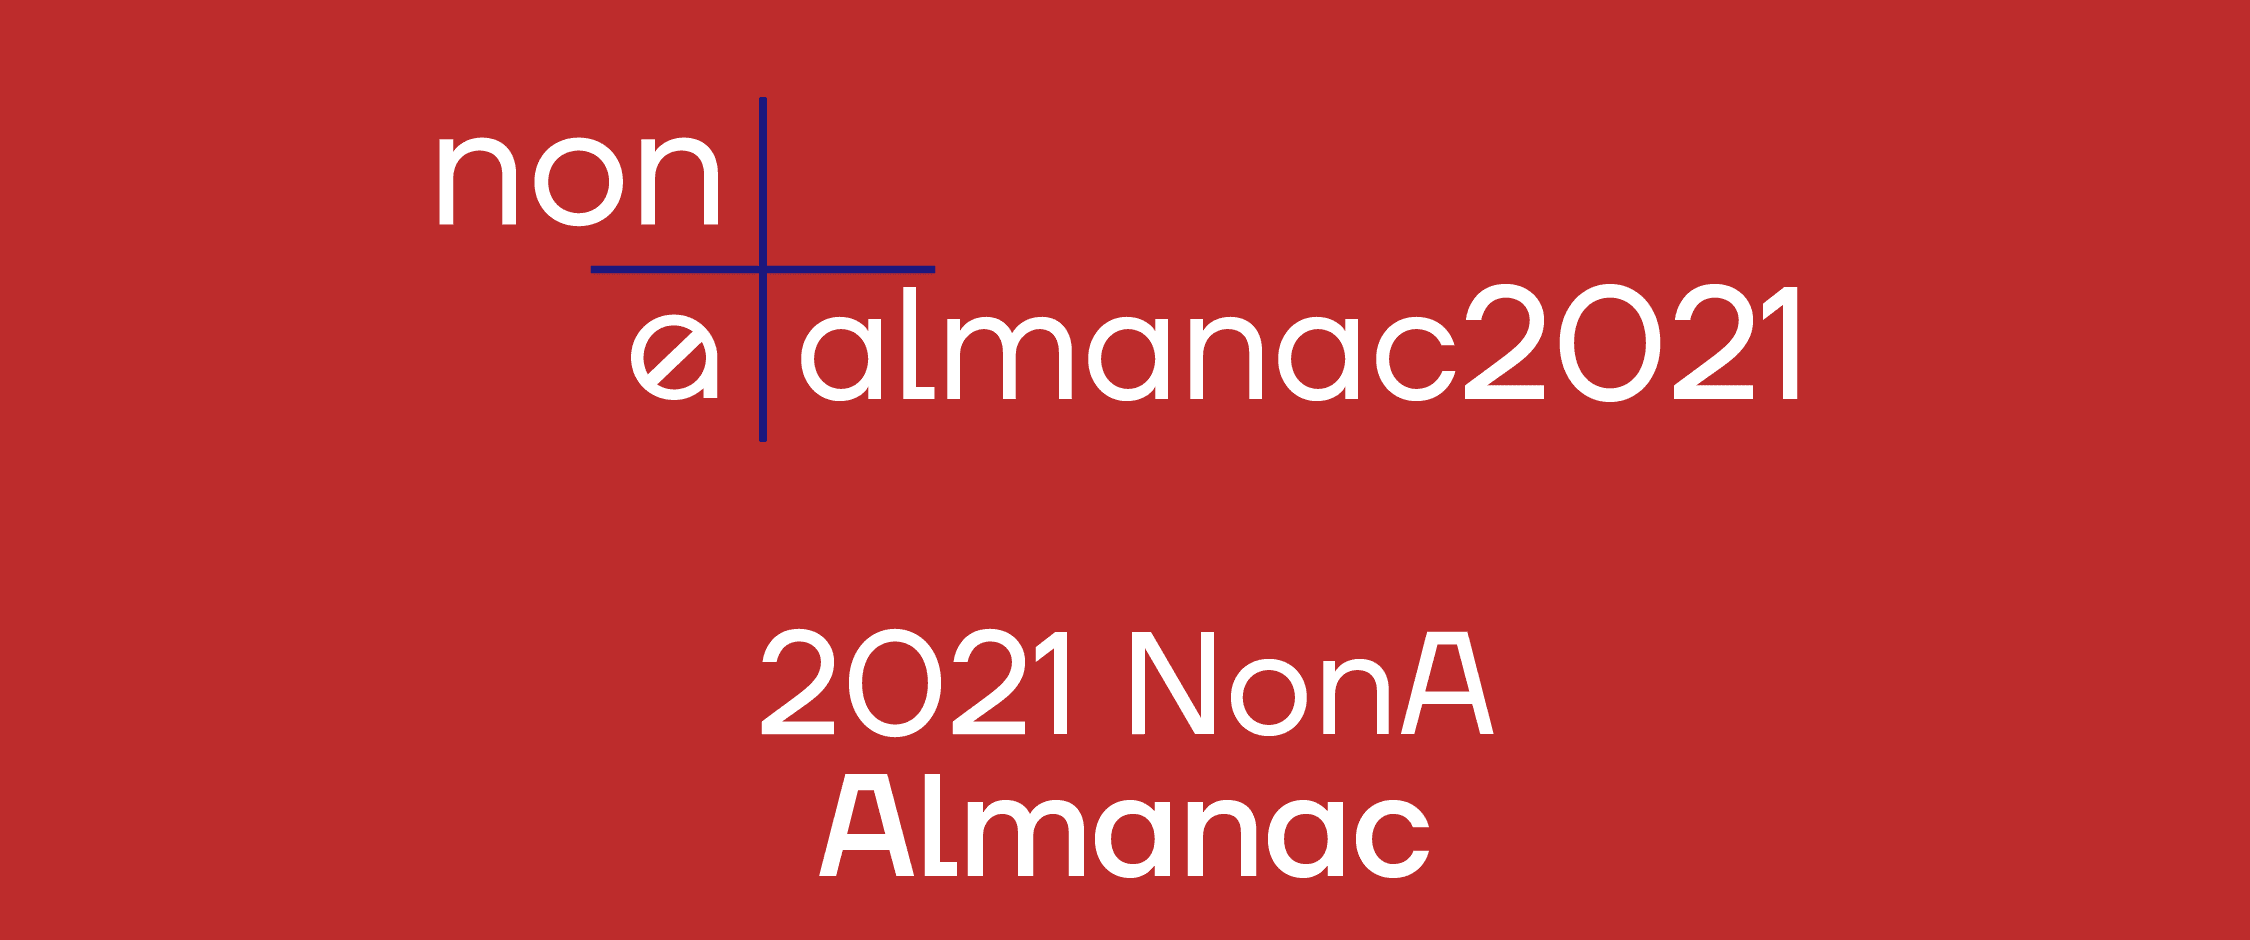 S-2021_NonA_Almanac-01